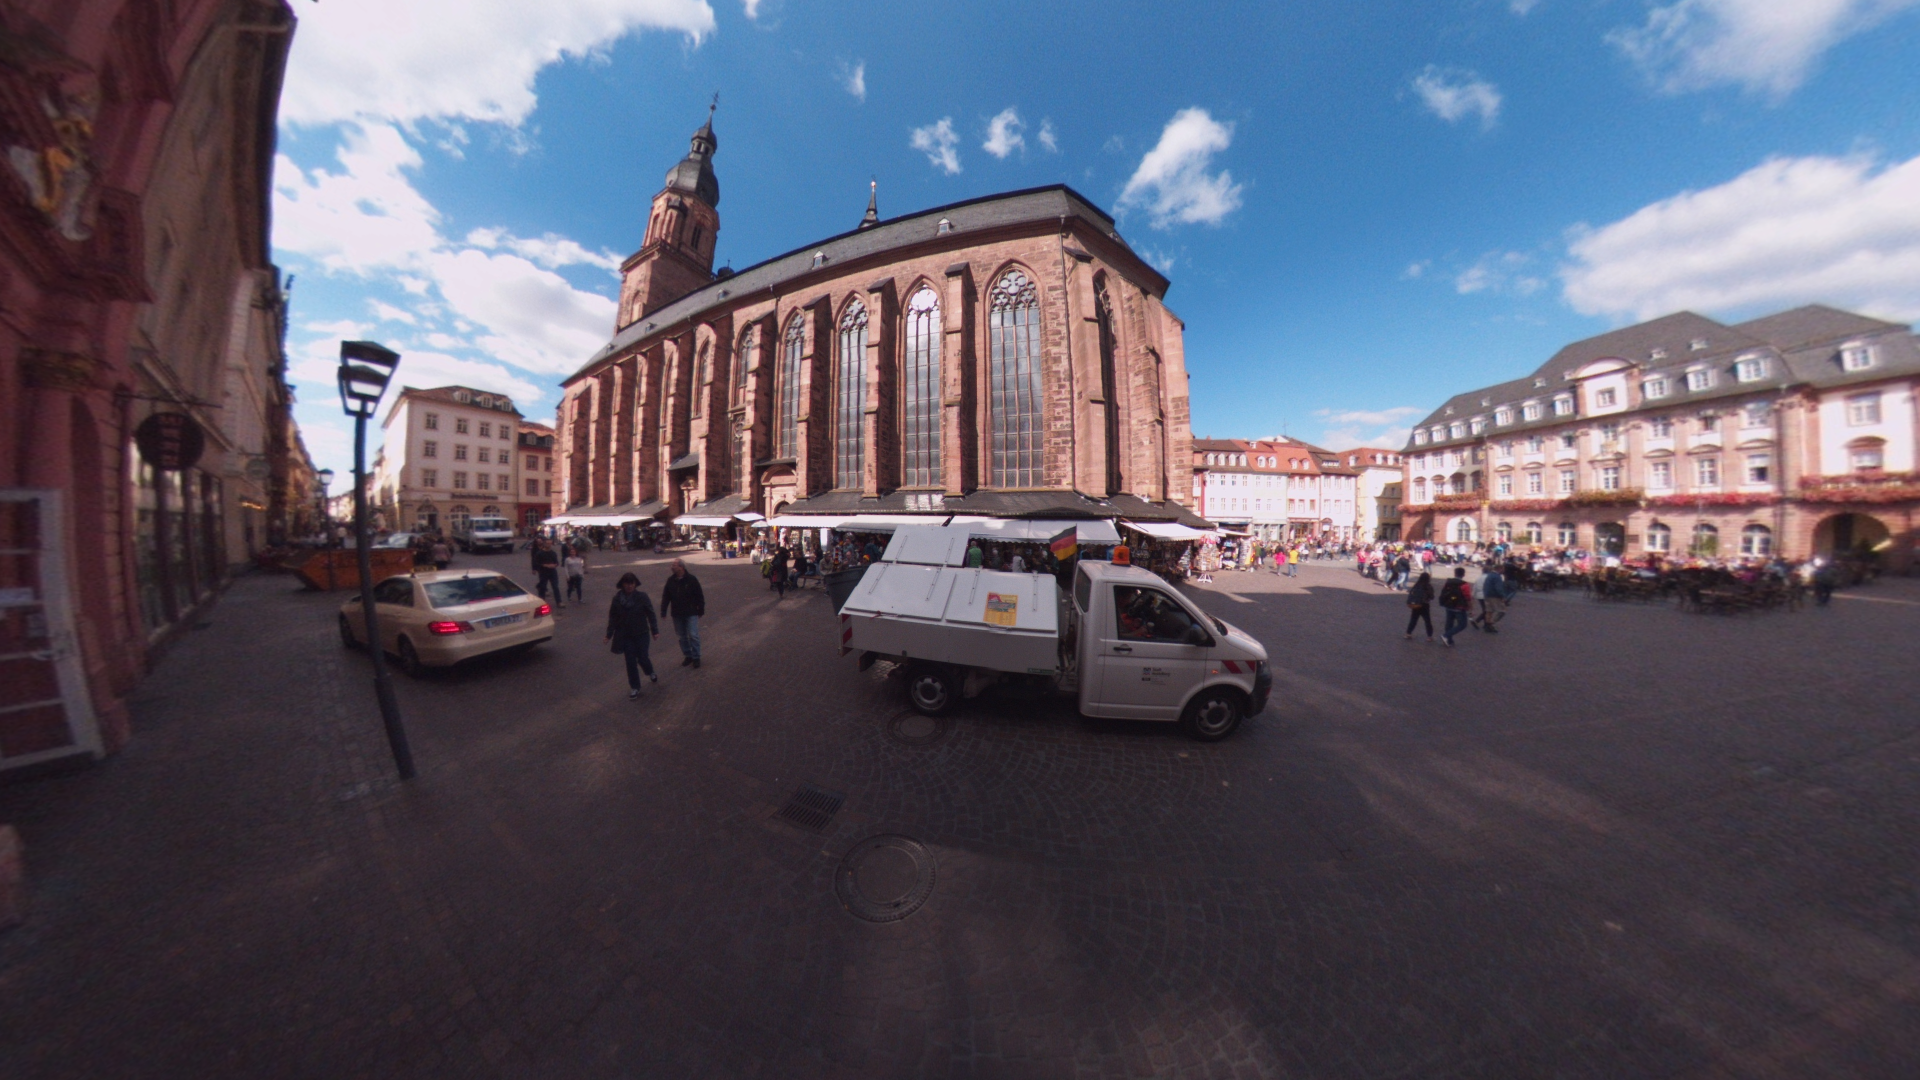 Fotos 360 Heiliggeistkirche de #Heidelberg. #VidePan por #Frankfurt